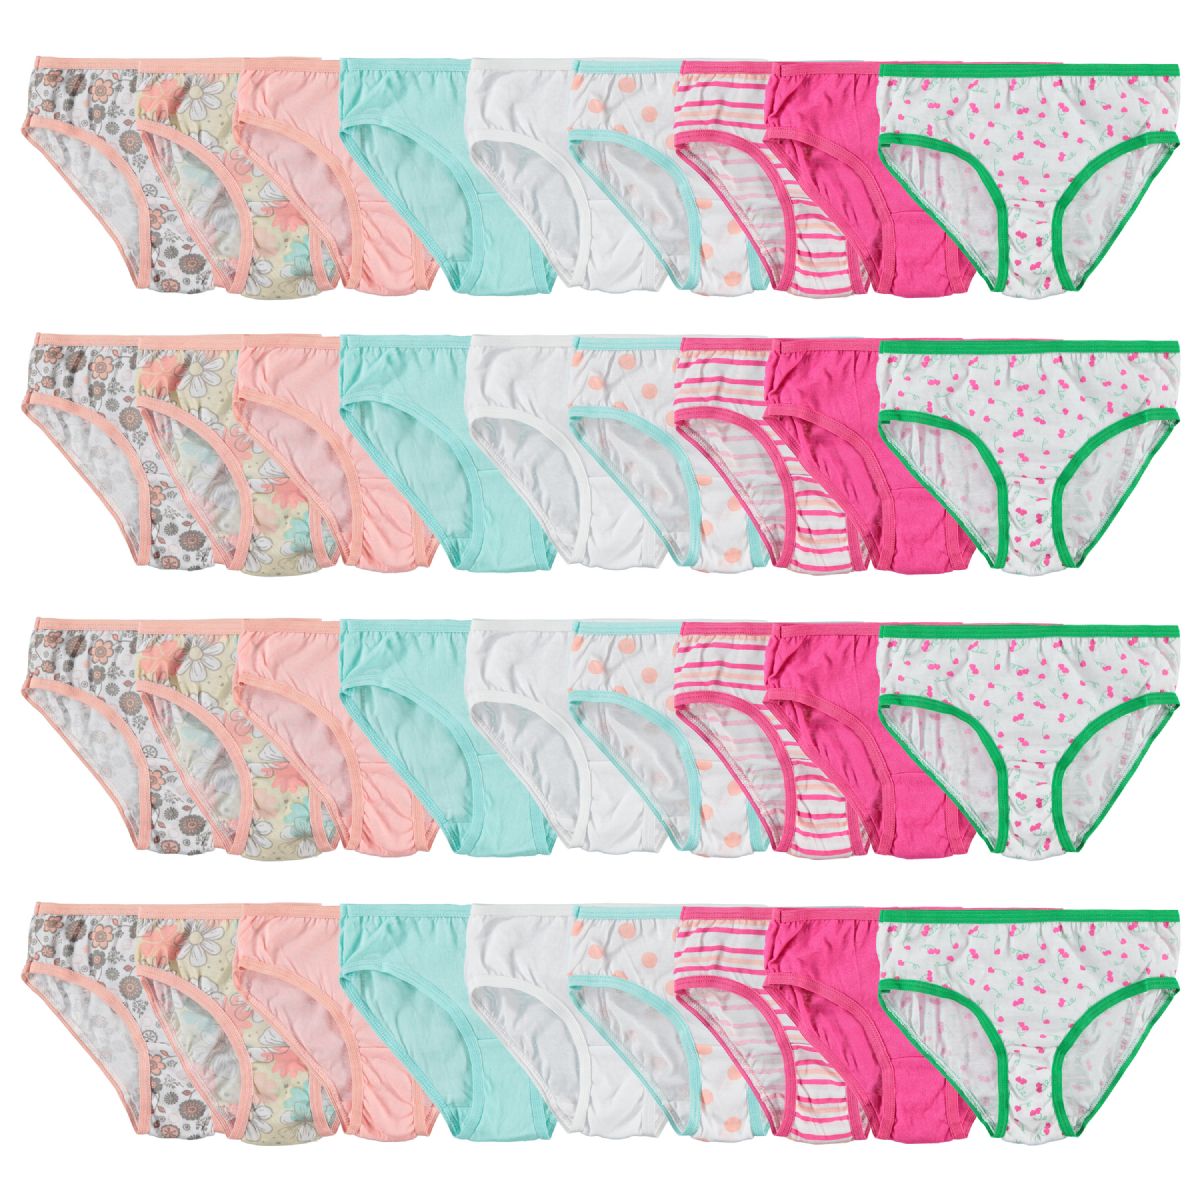 72 Wholesale Girls Cotton Blend Assorted Printed Underwear Size 10